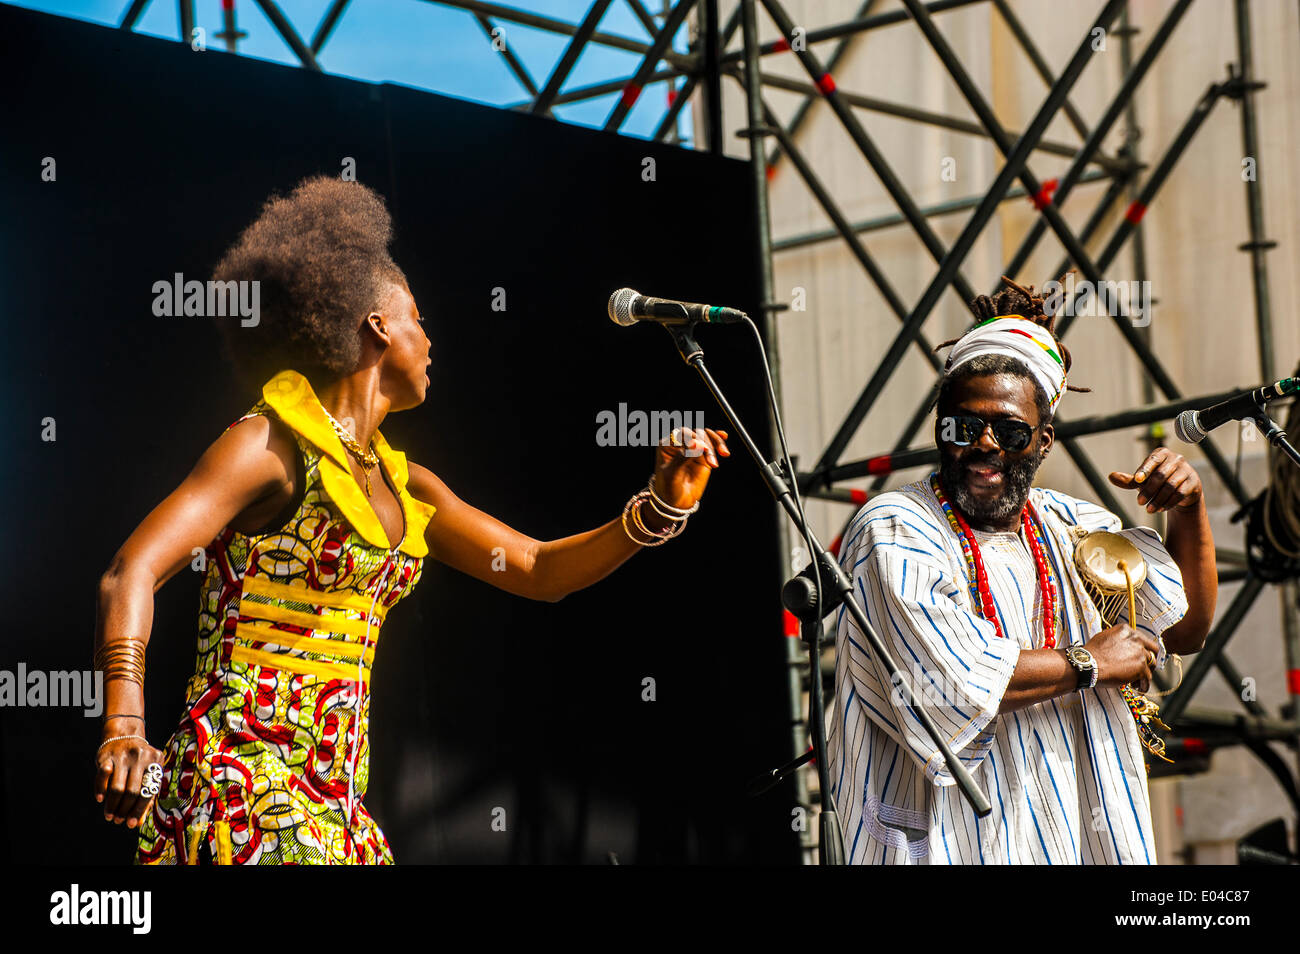 Turin, Italie. 01 mai, 2014. La Piazza Castello ' Torino Jazz Festival ' - Taranta nera - Salento a rencontré l'Afrique - Kandi Güira et Baba Sissoko Crédit : Realy Easy Star/Alamy Live News Banque D'Images